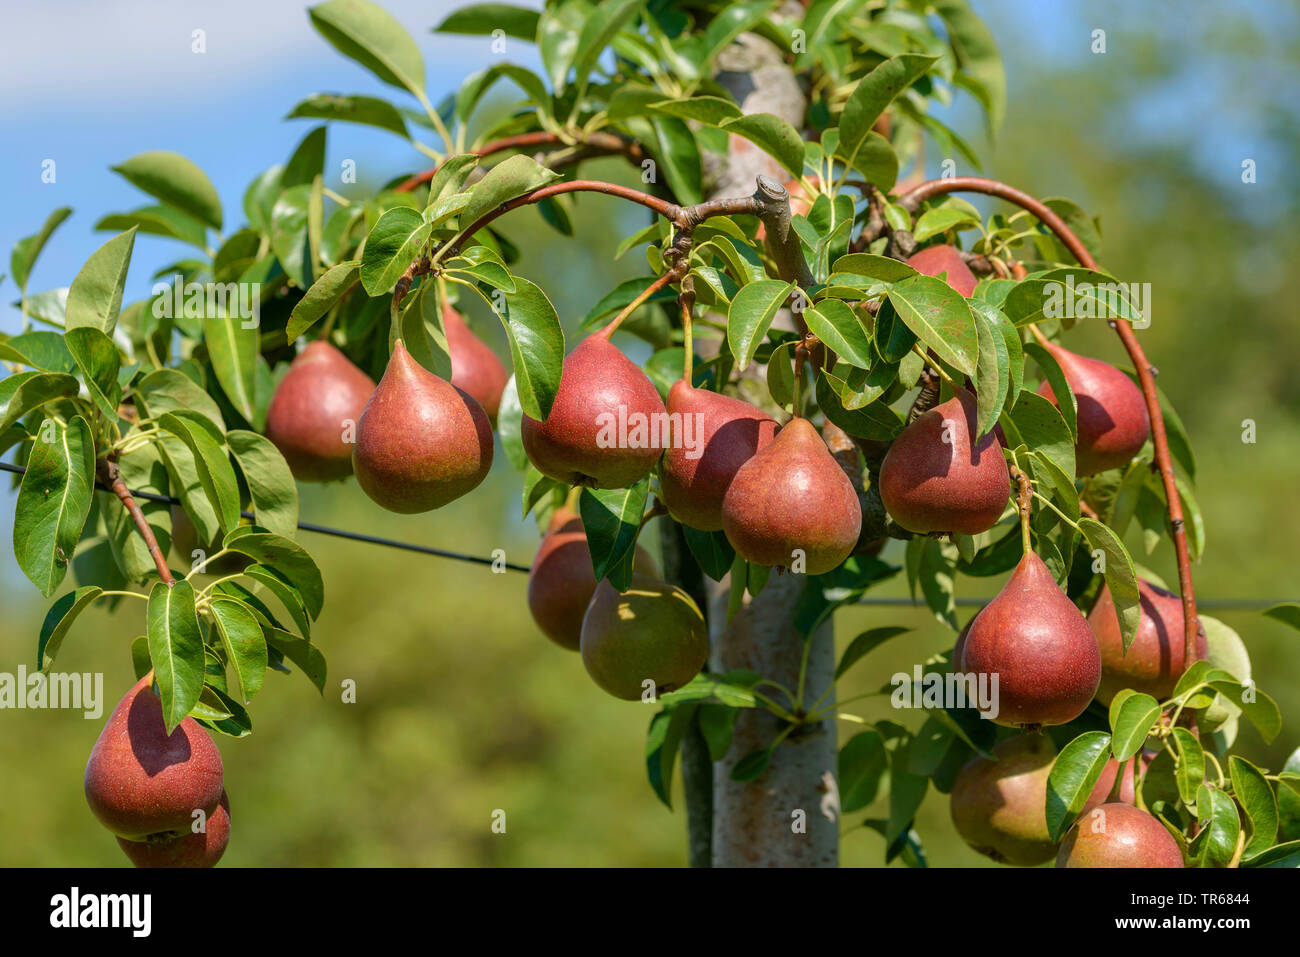 Common pear (Pyrus communis 'Dicolor', Pyrus communis Dicolor), pears on a tree, cultivar Dicolor, Germany, Saxony Stock Photo